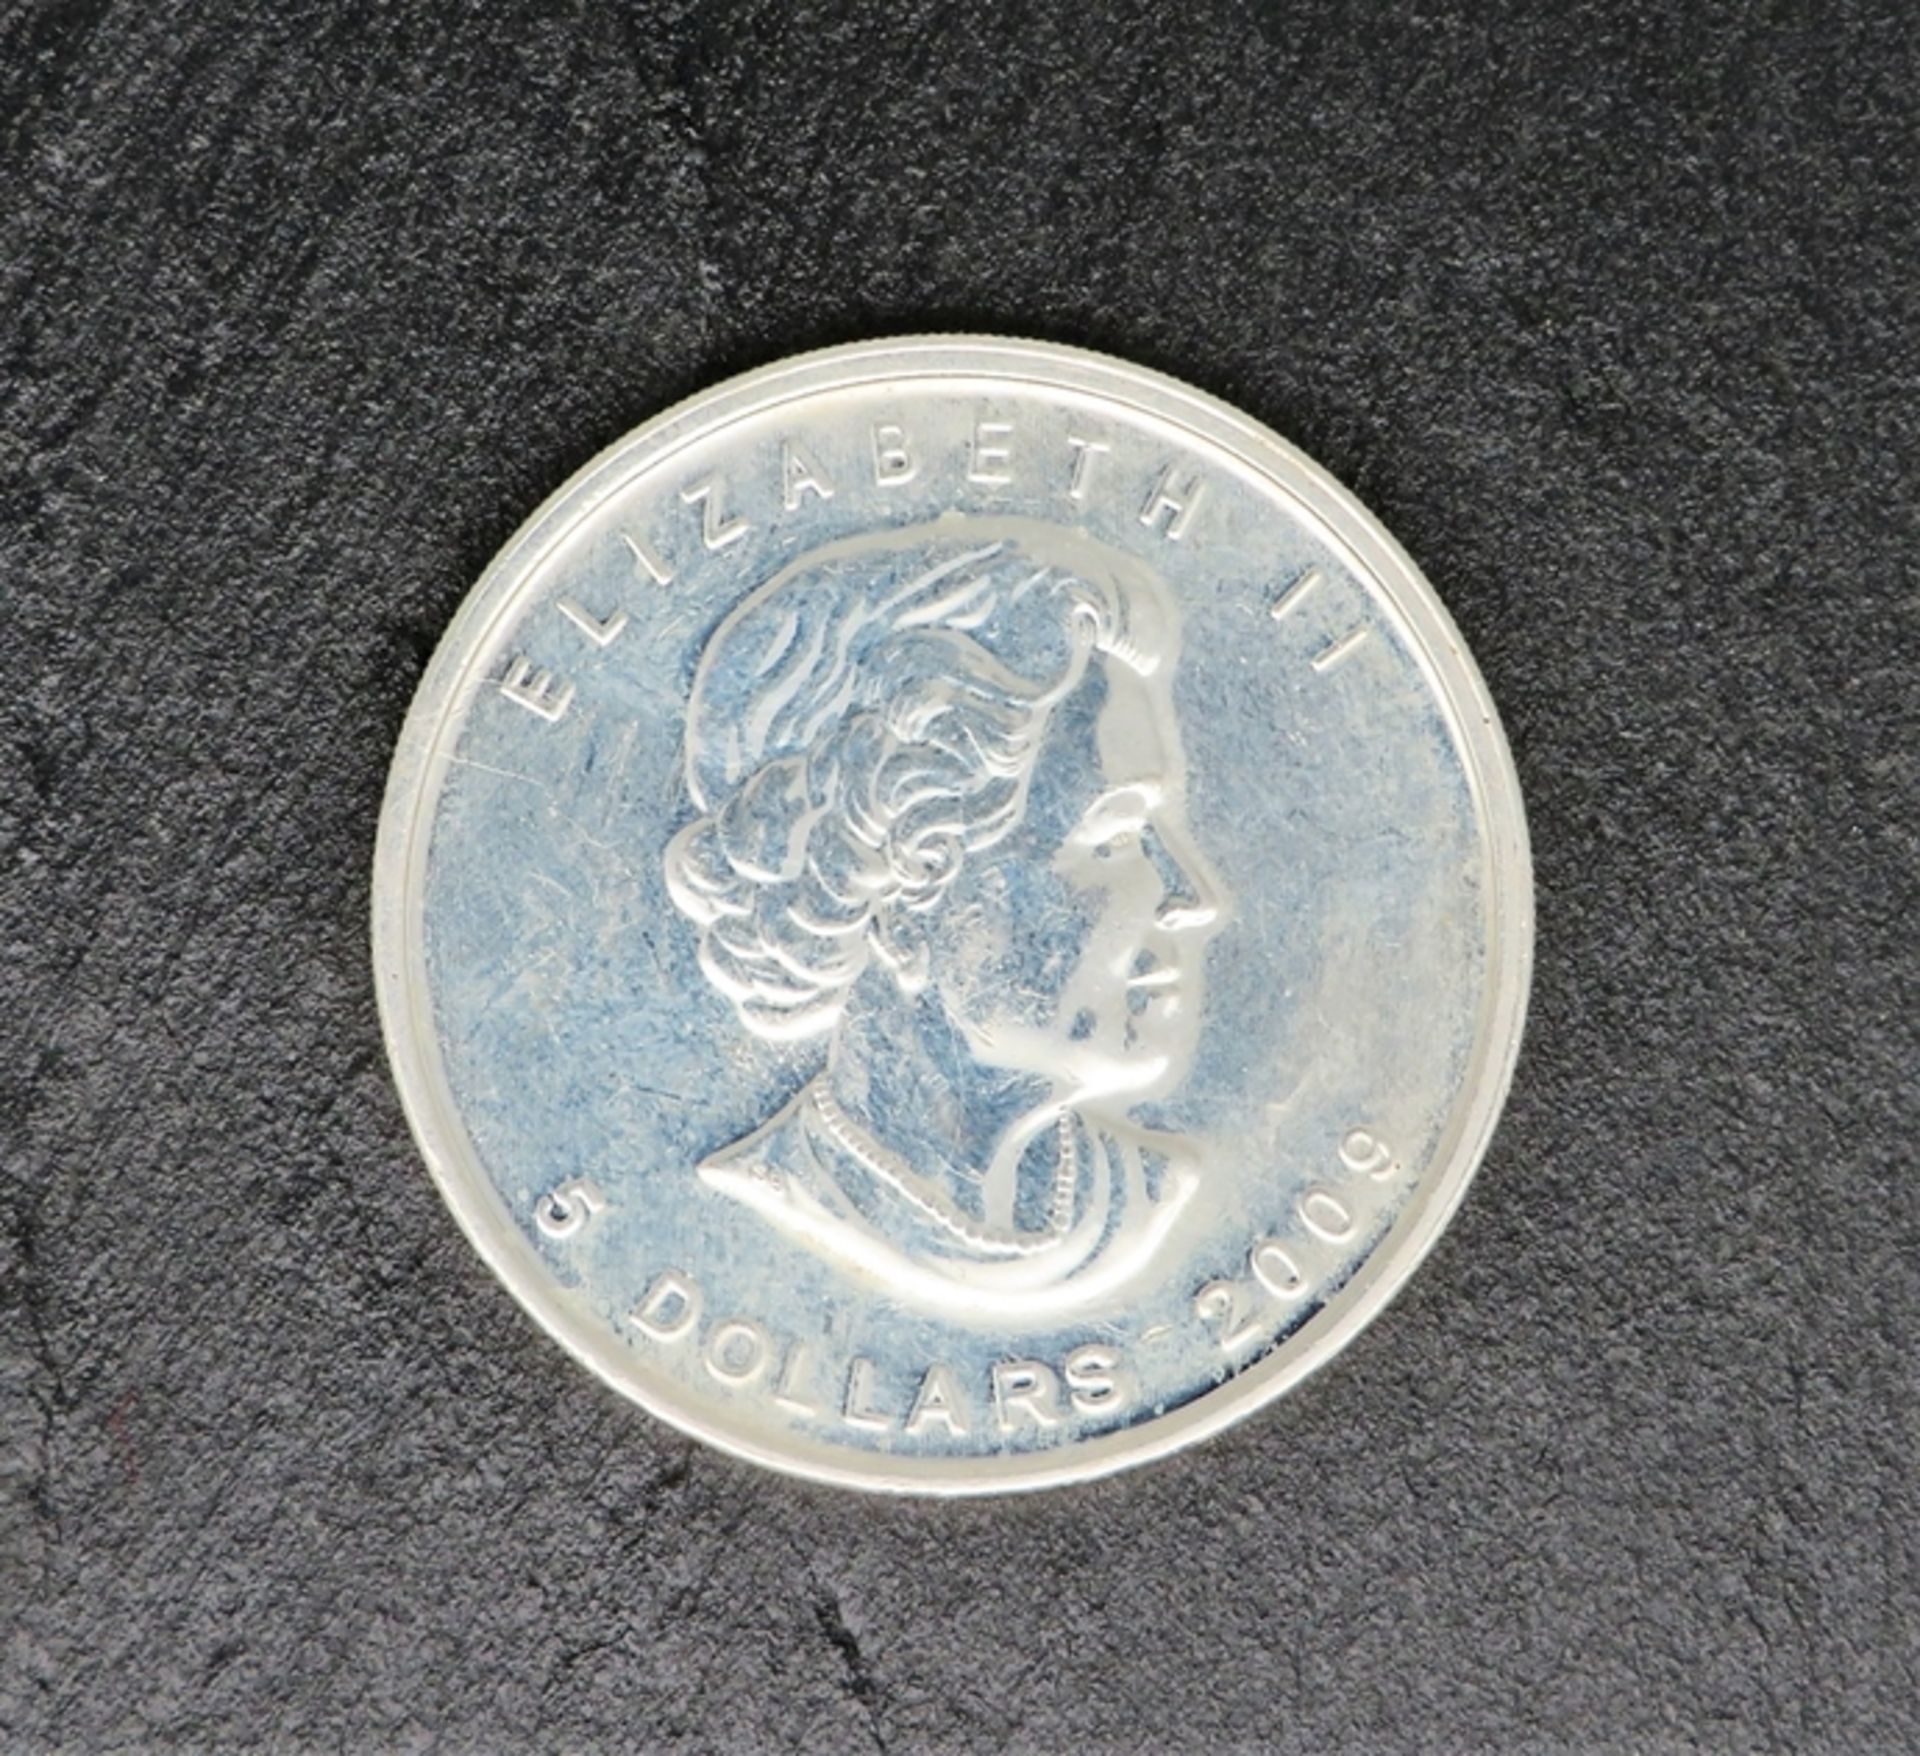 RT16-2 25Silbermünzen, Canada, Maple Leaf, Elizabeth II., 5 Dollars, 2009, je 1 OZ, Feinsilber 999,